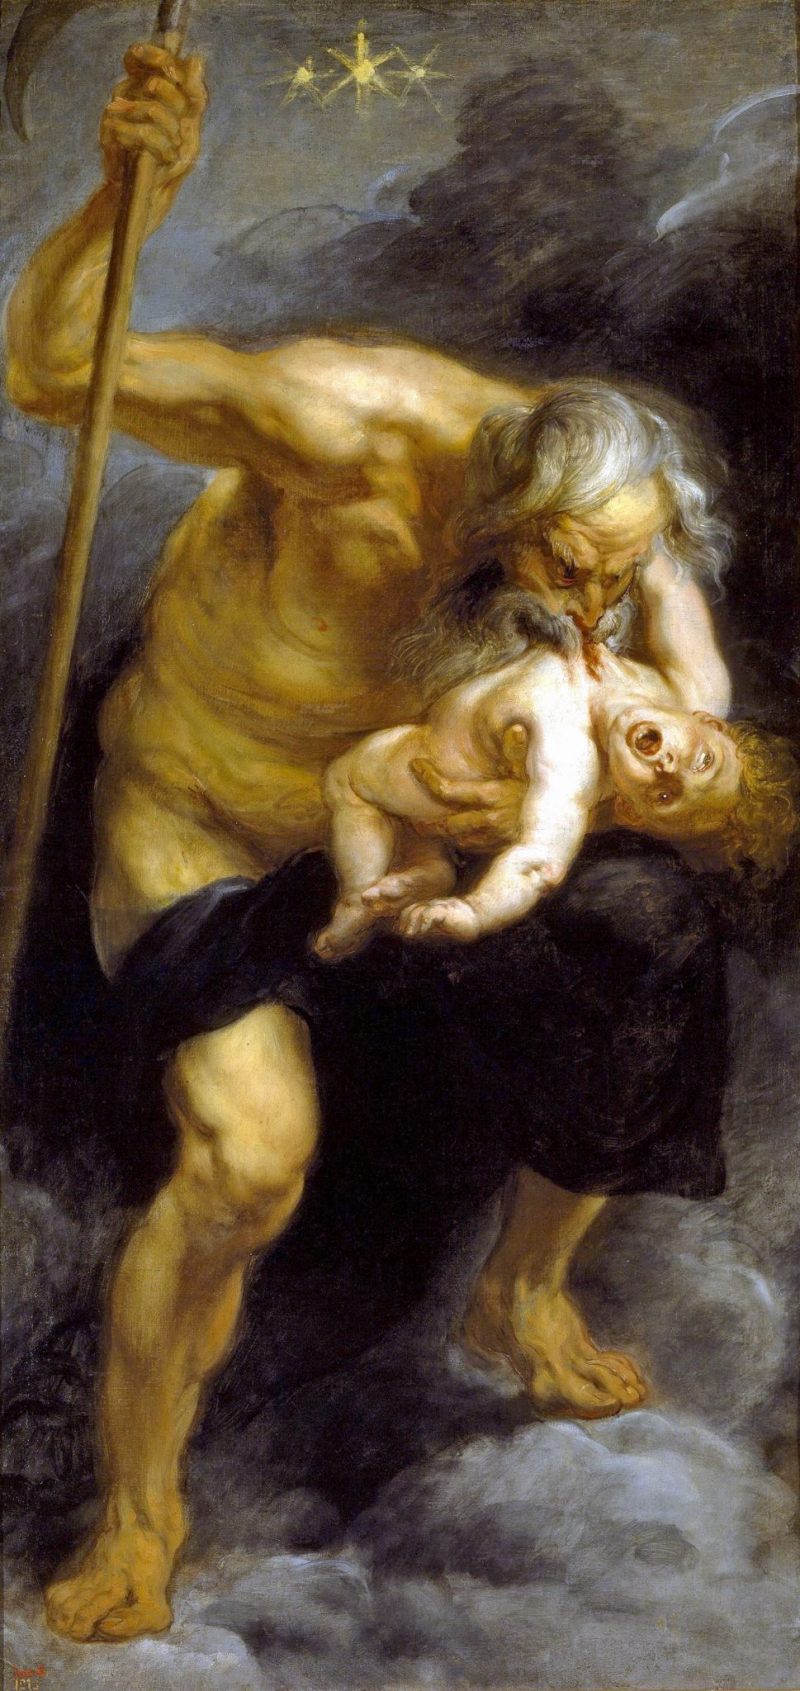 Saturno devorando a su hijo